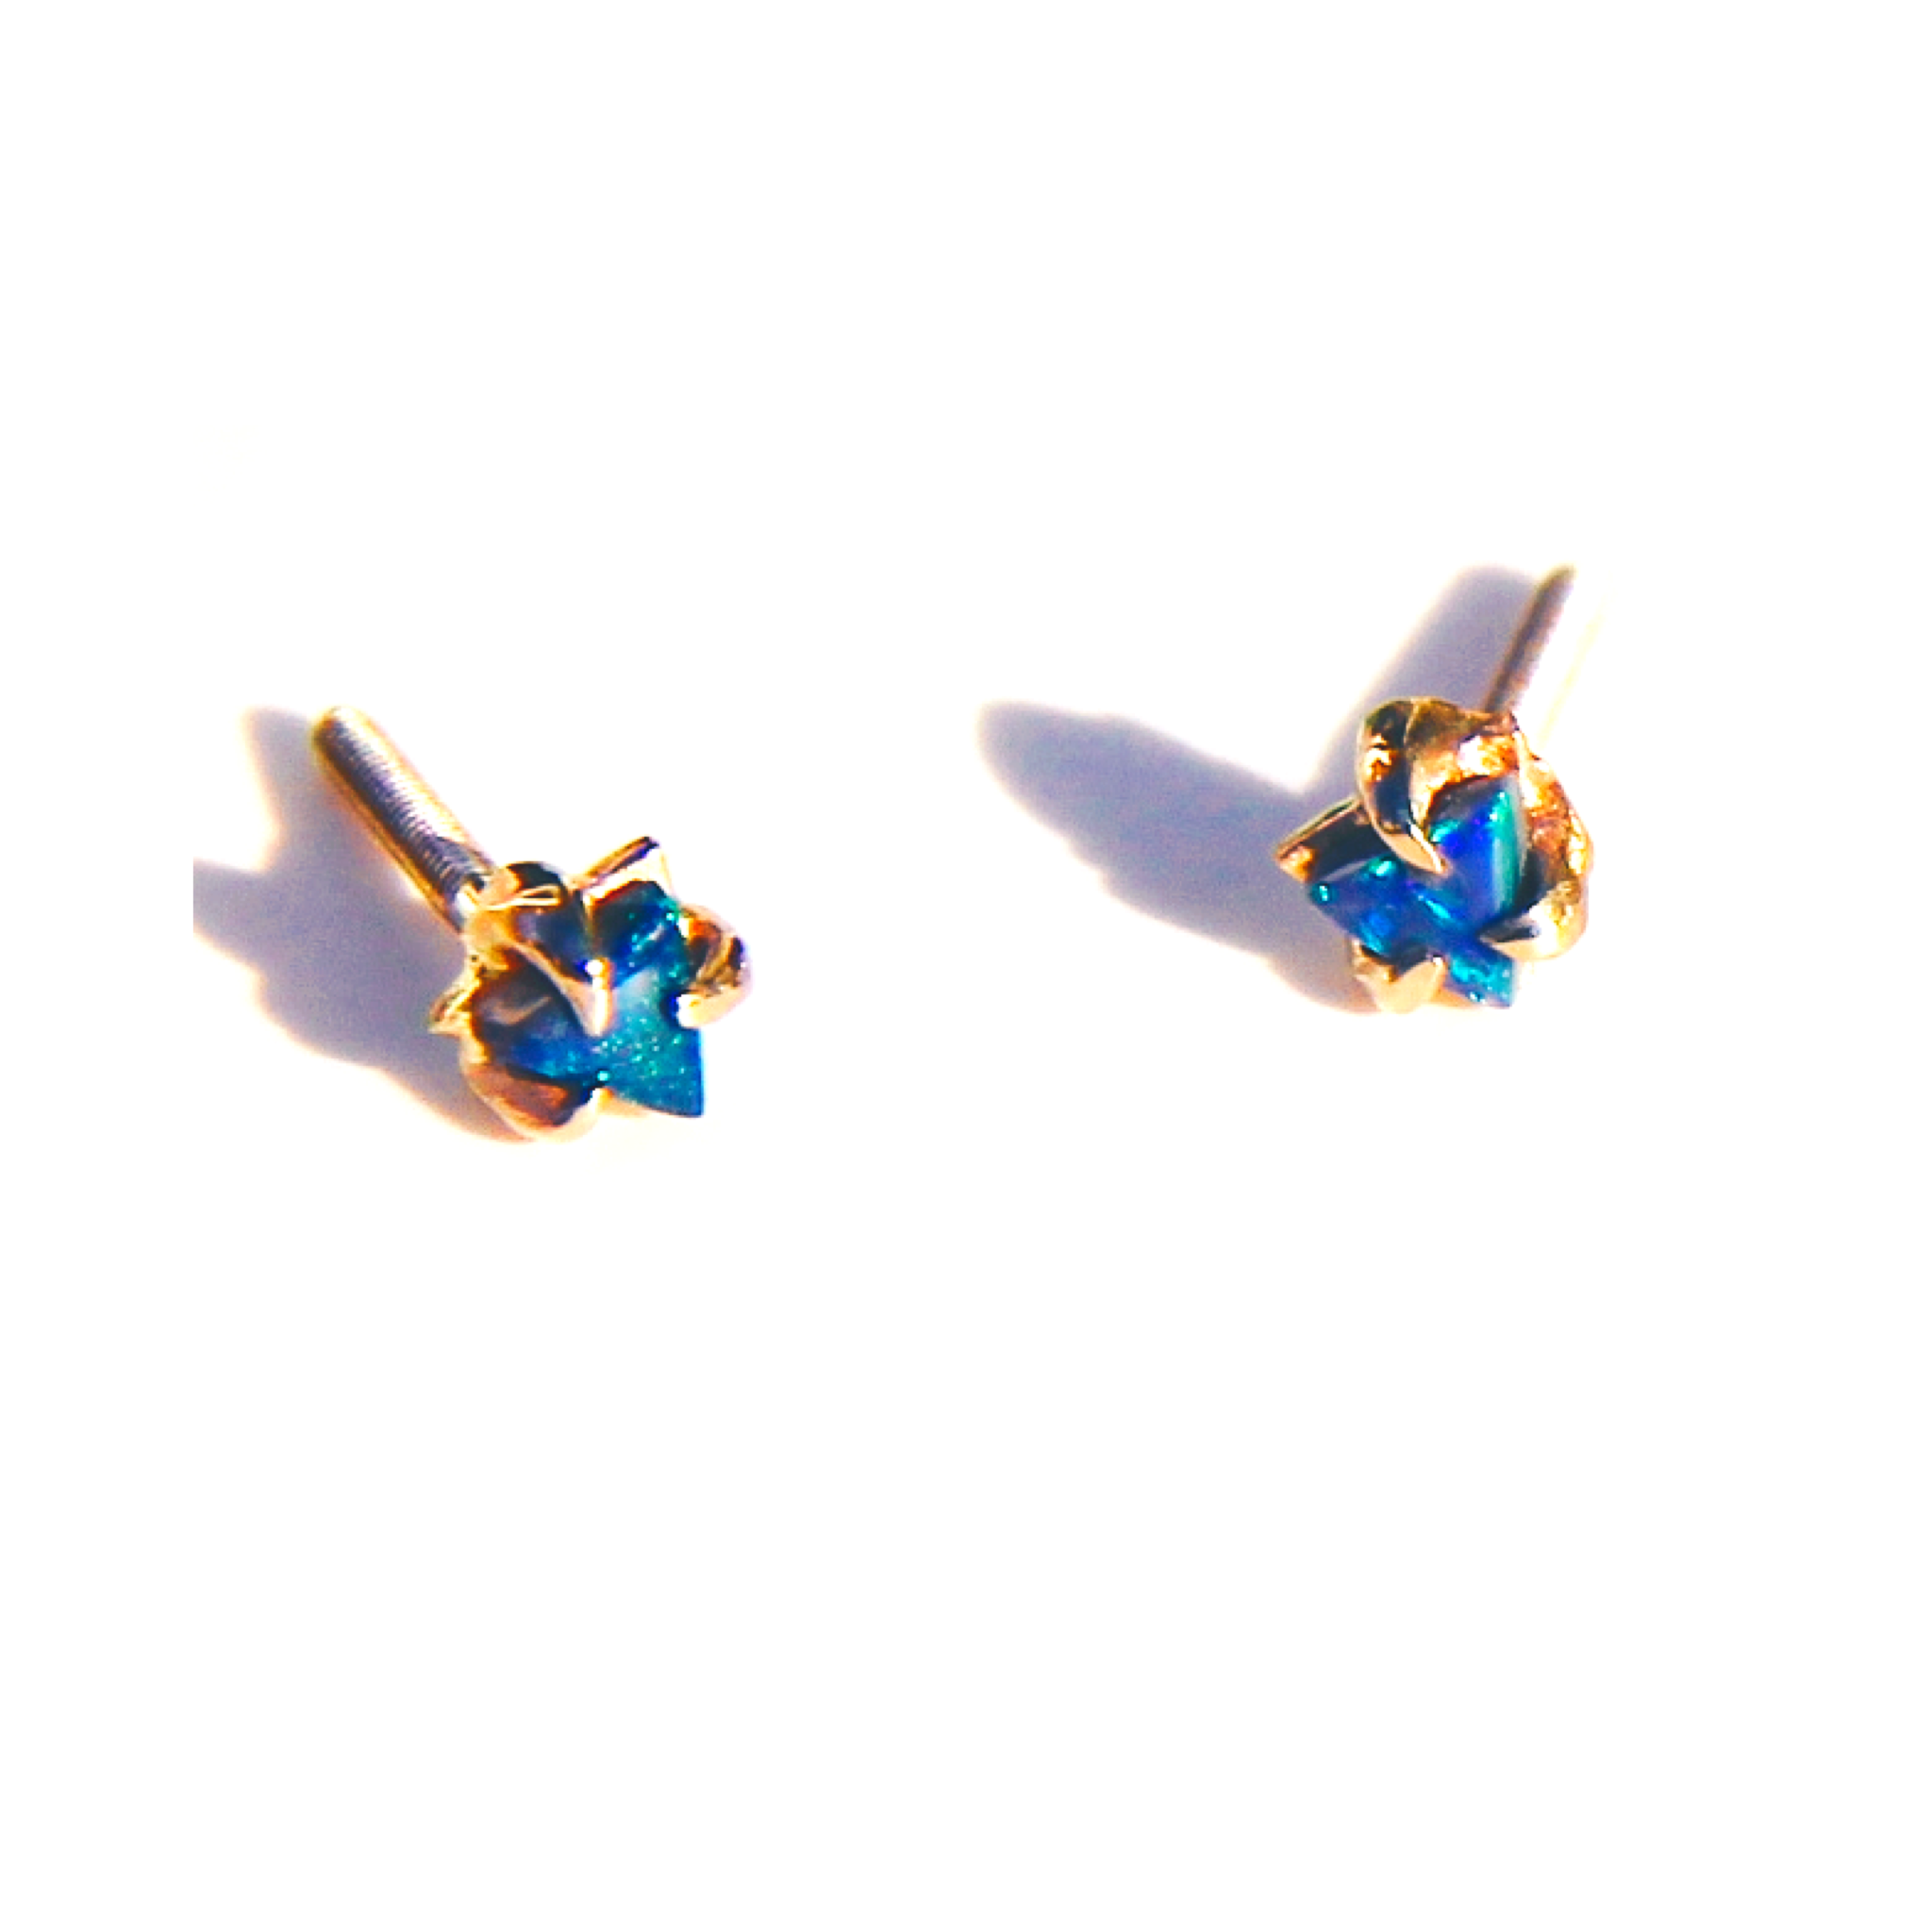 The Tinniest Triangle Opal Studs with screw backs